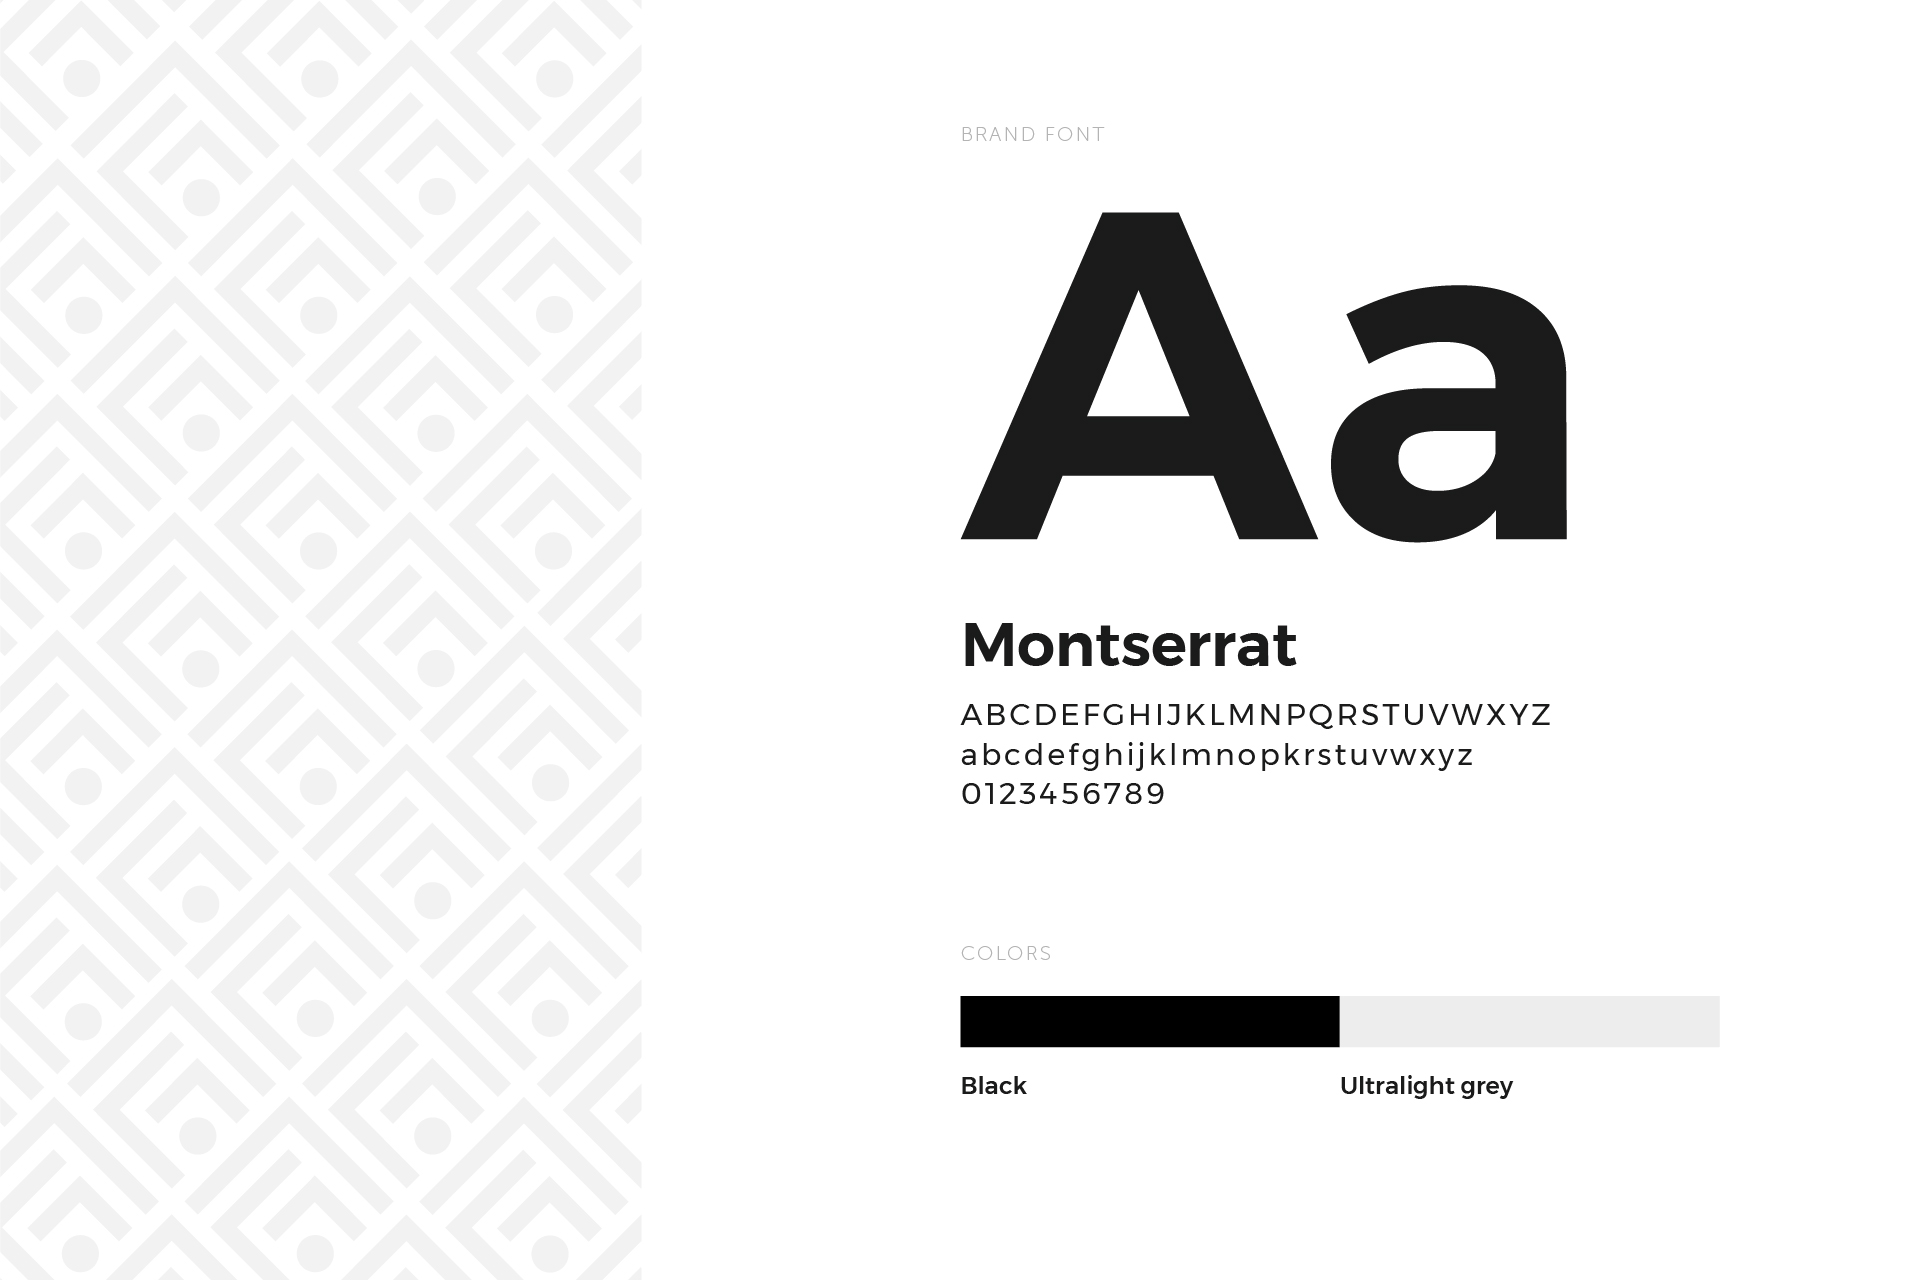 ARA-reference_Brand font